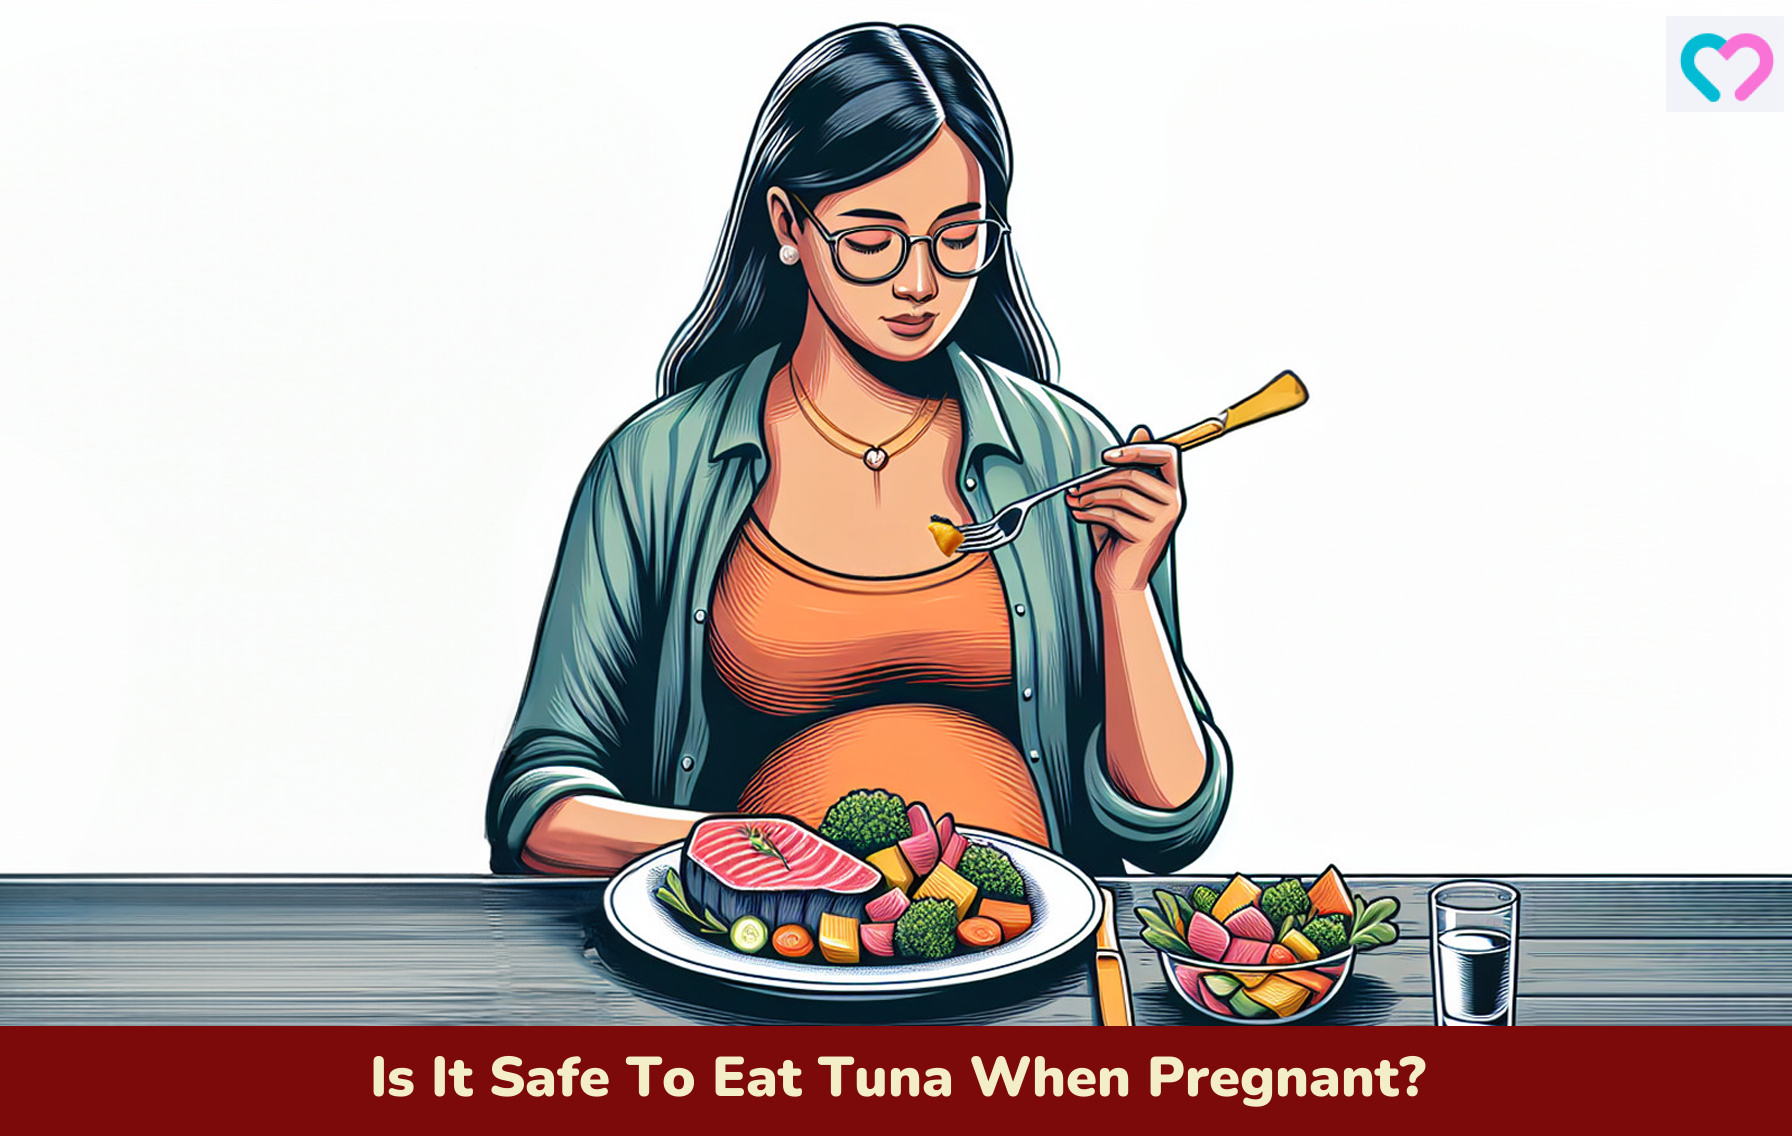 tuna while pregnant_illustration